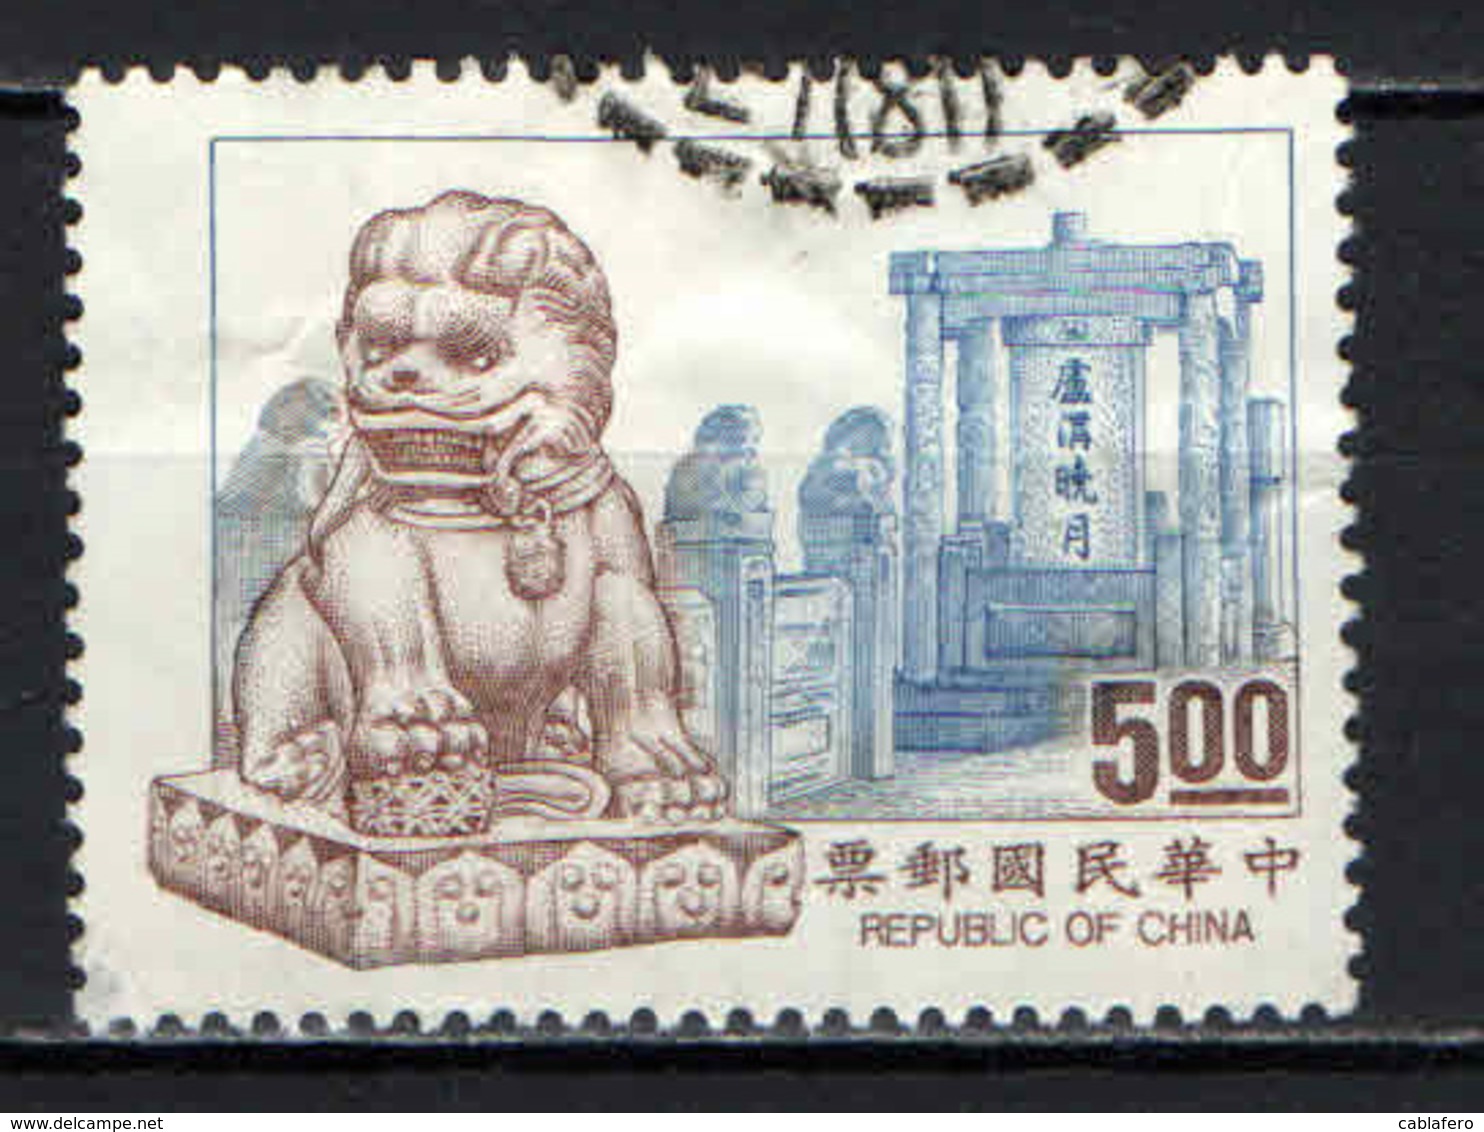 TAIWAN - 1992 - Stone LionofLugouqiao - USATO - Used Stamps